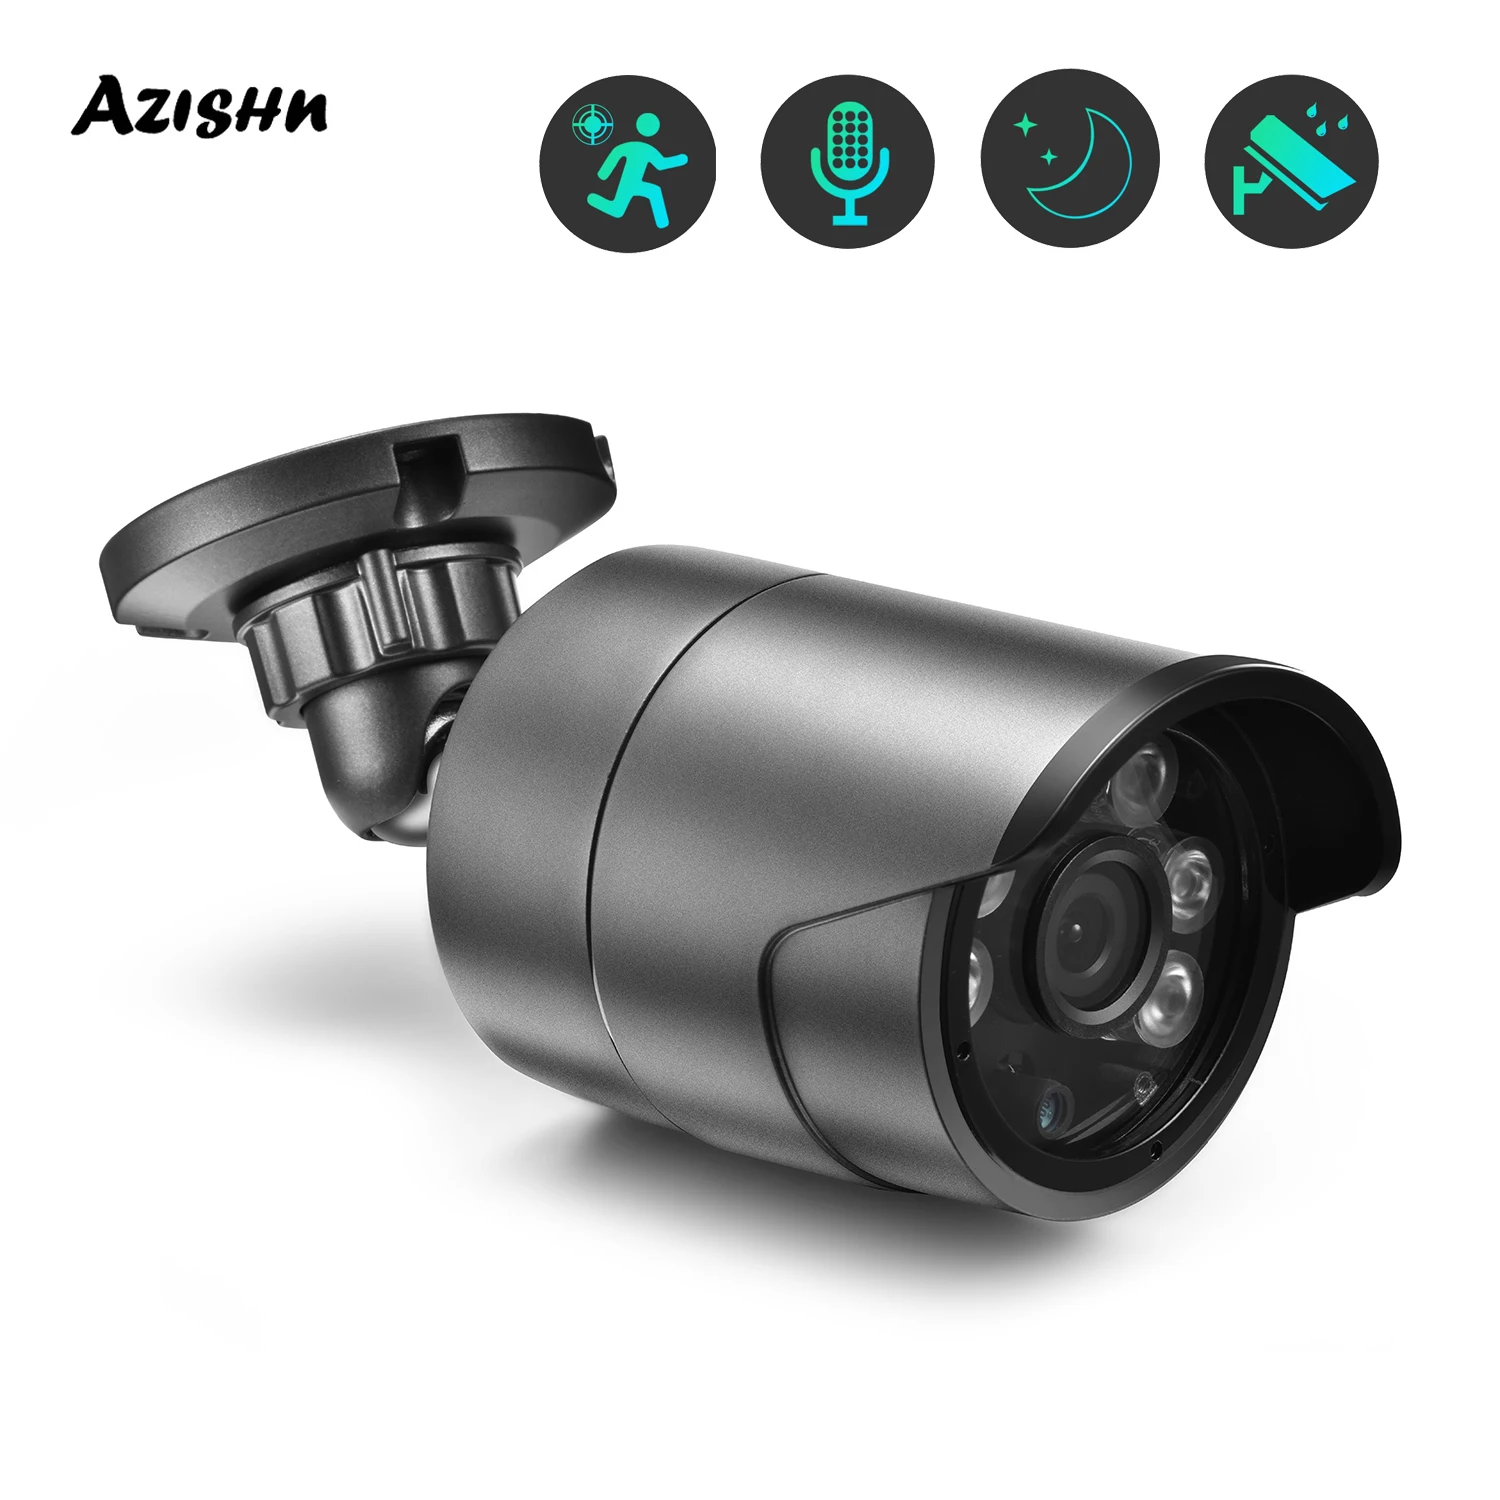 azishn-8mp-4k-hd-camera-ip-protecao-de-seguranca-camer-bala-ao-ar-livre-a-prova-dwaterproof-agua-cor-visao-noturna-dupla-fonte-de-luz-vigilancia